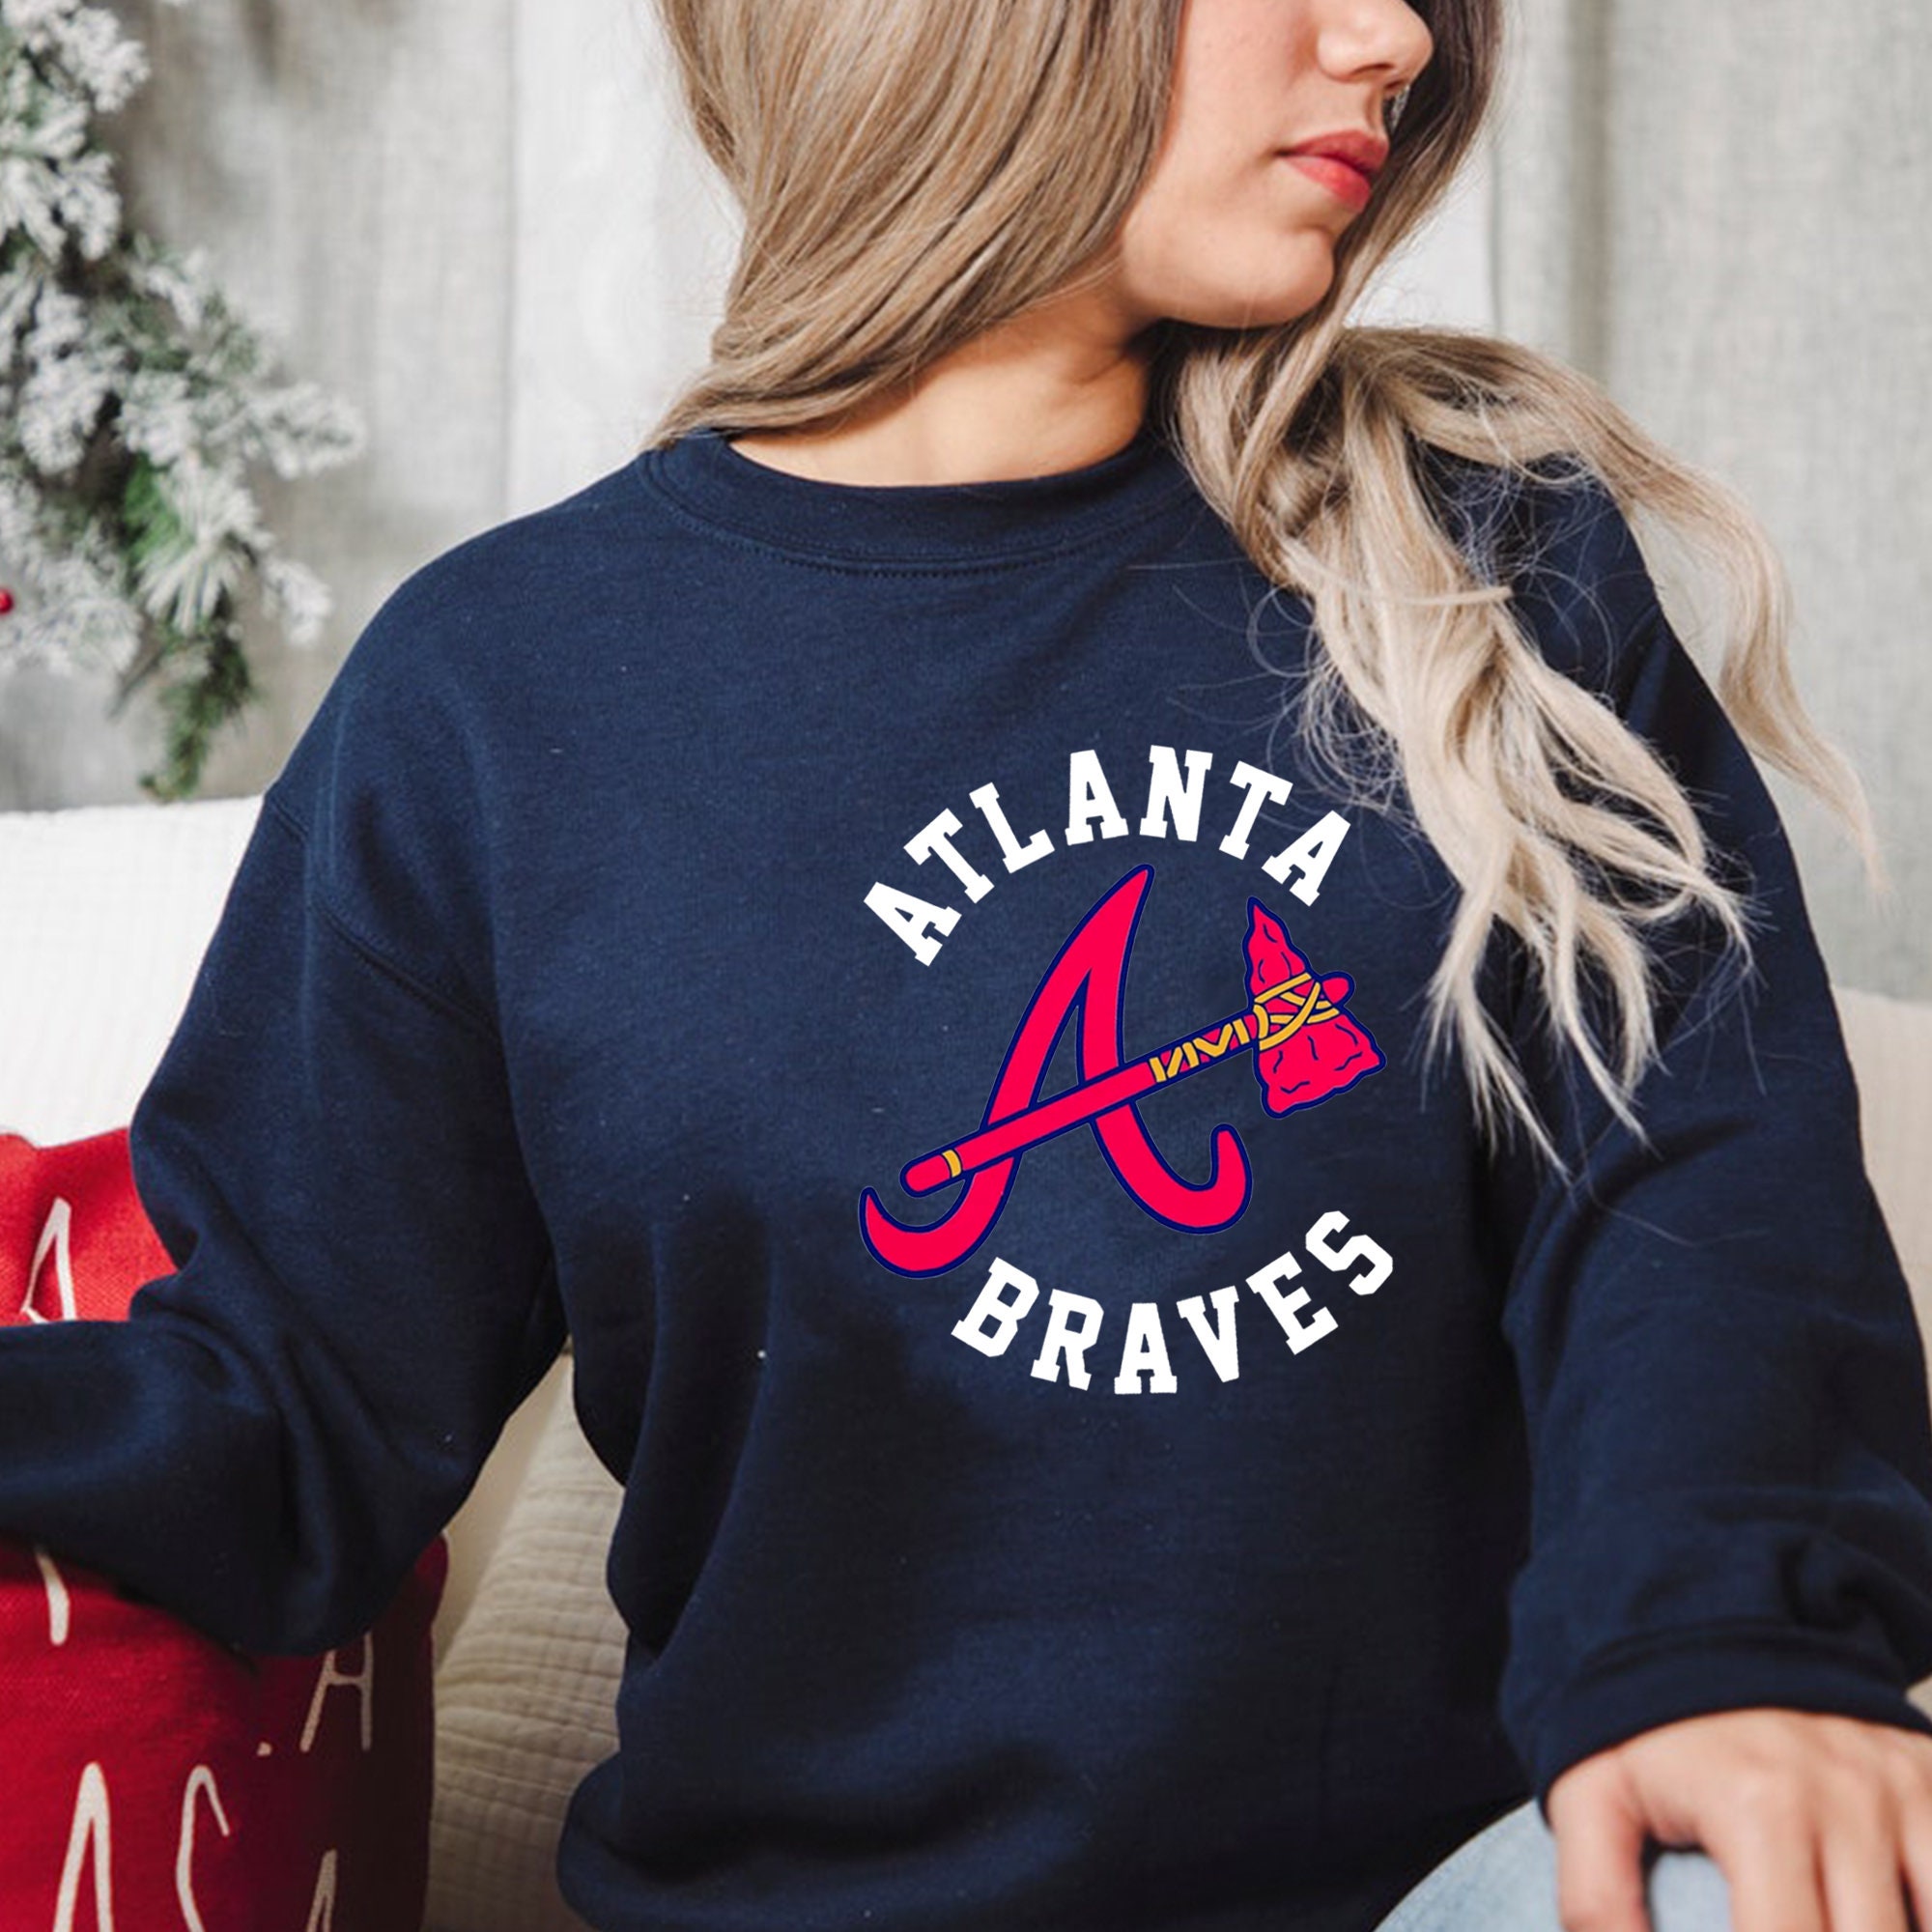 Champions Vintage Atlanta Braves 2021 World Series Sweatshirts - Teeholly